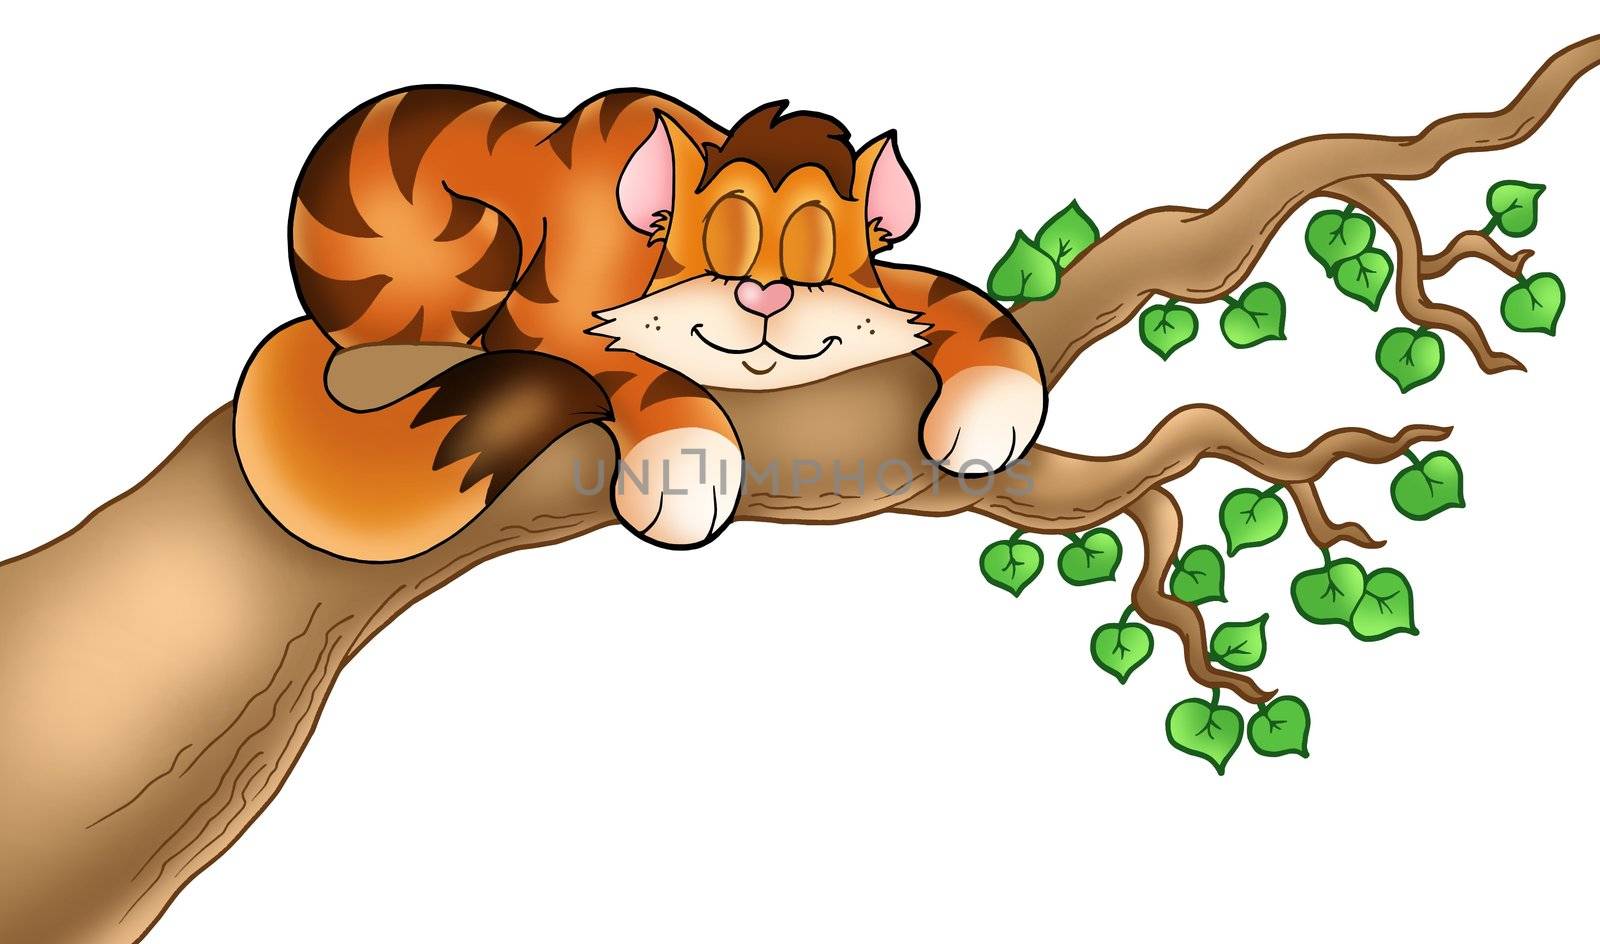 Sleeping cat on tree branch - color illustration.